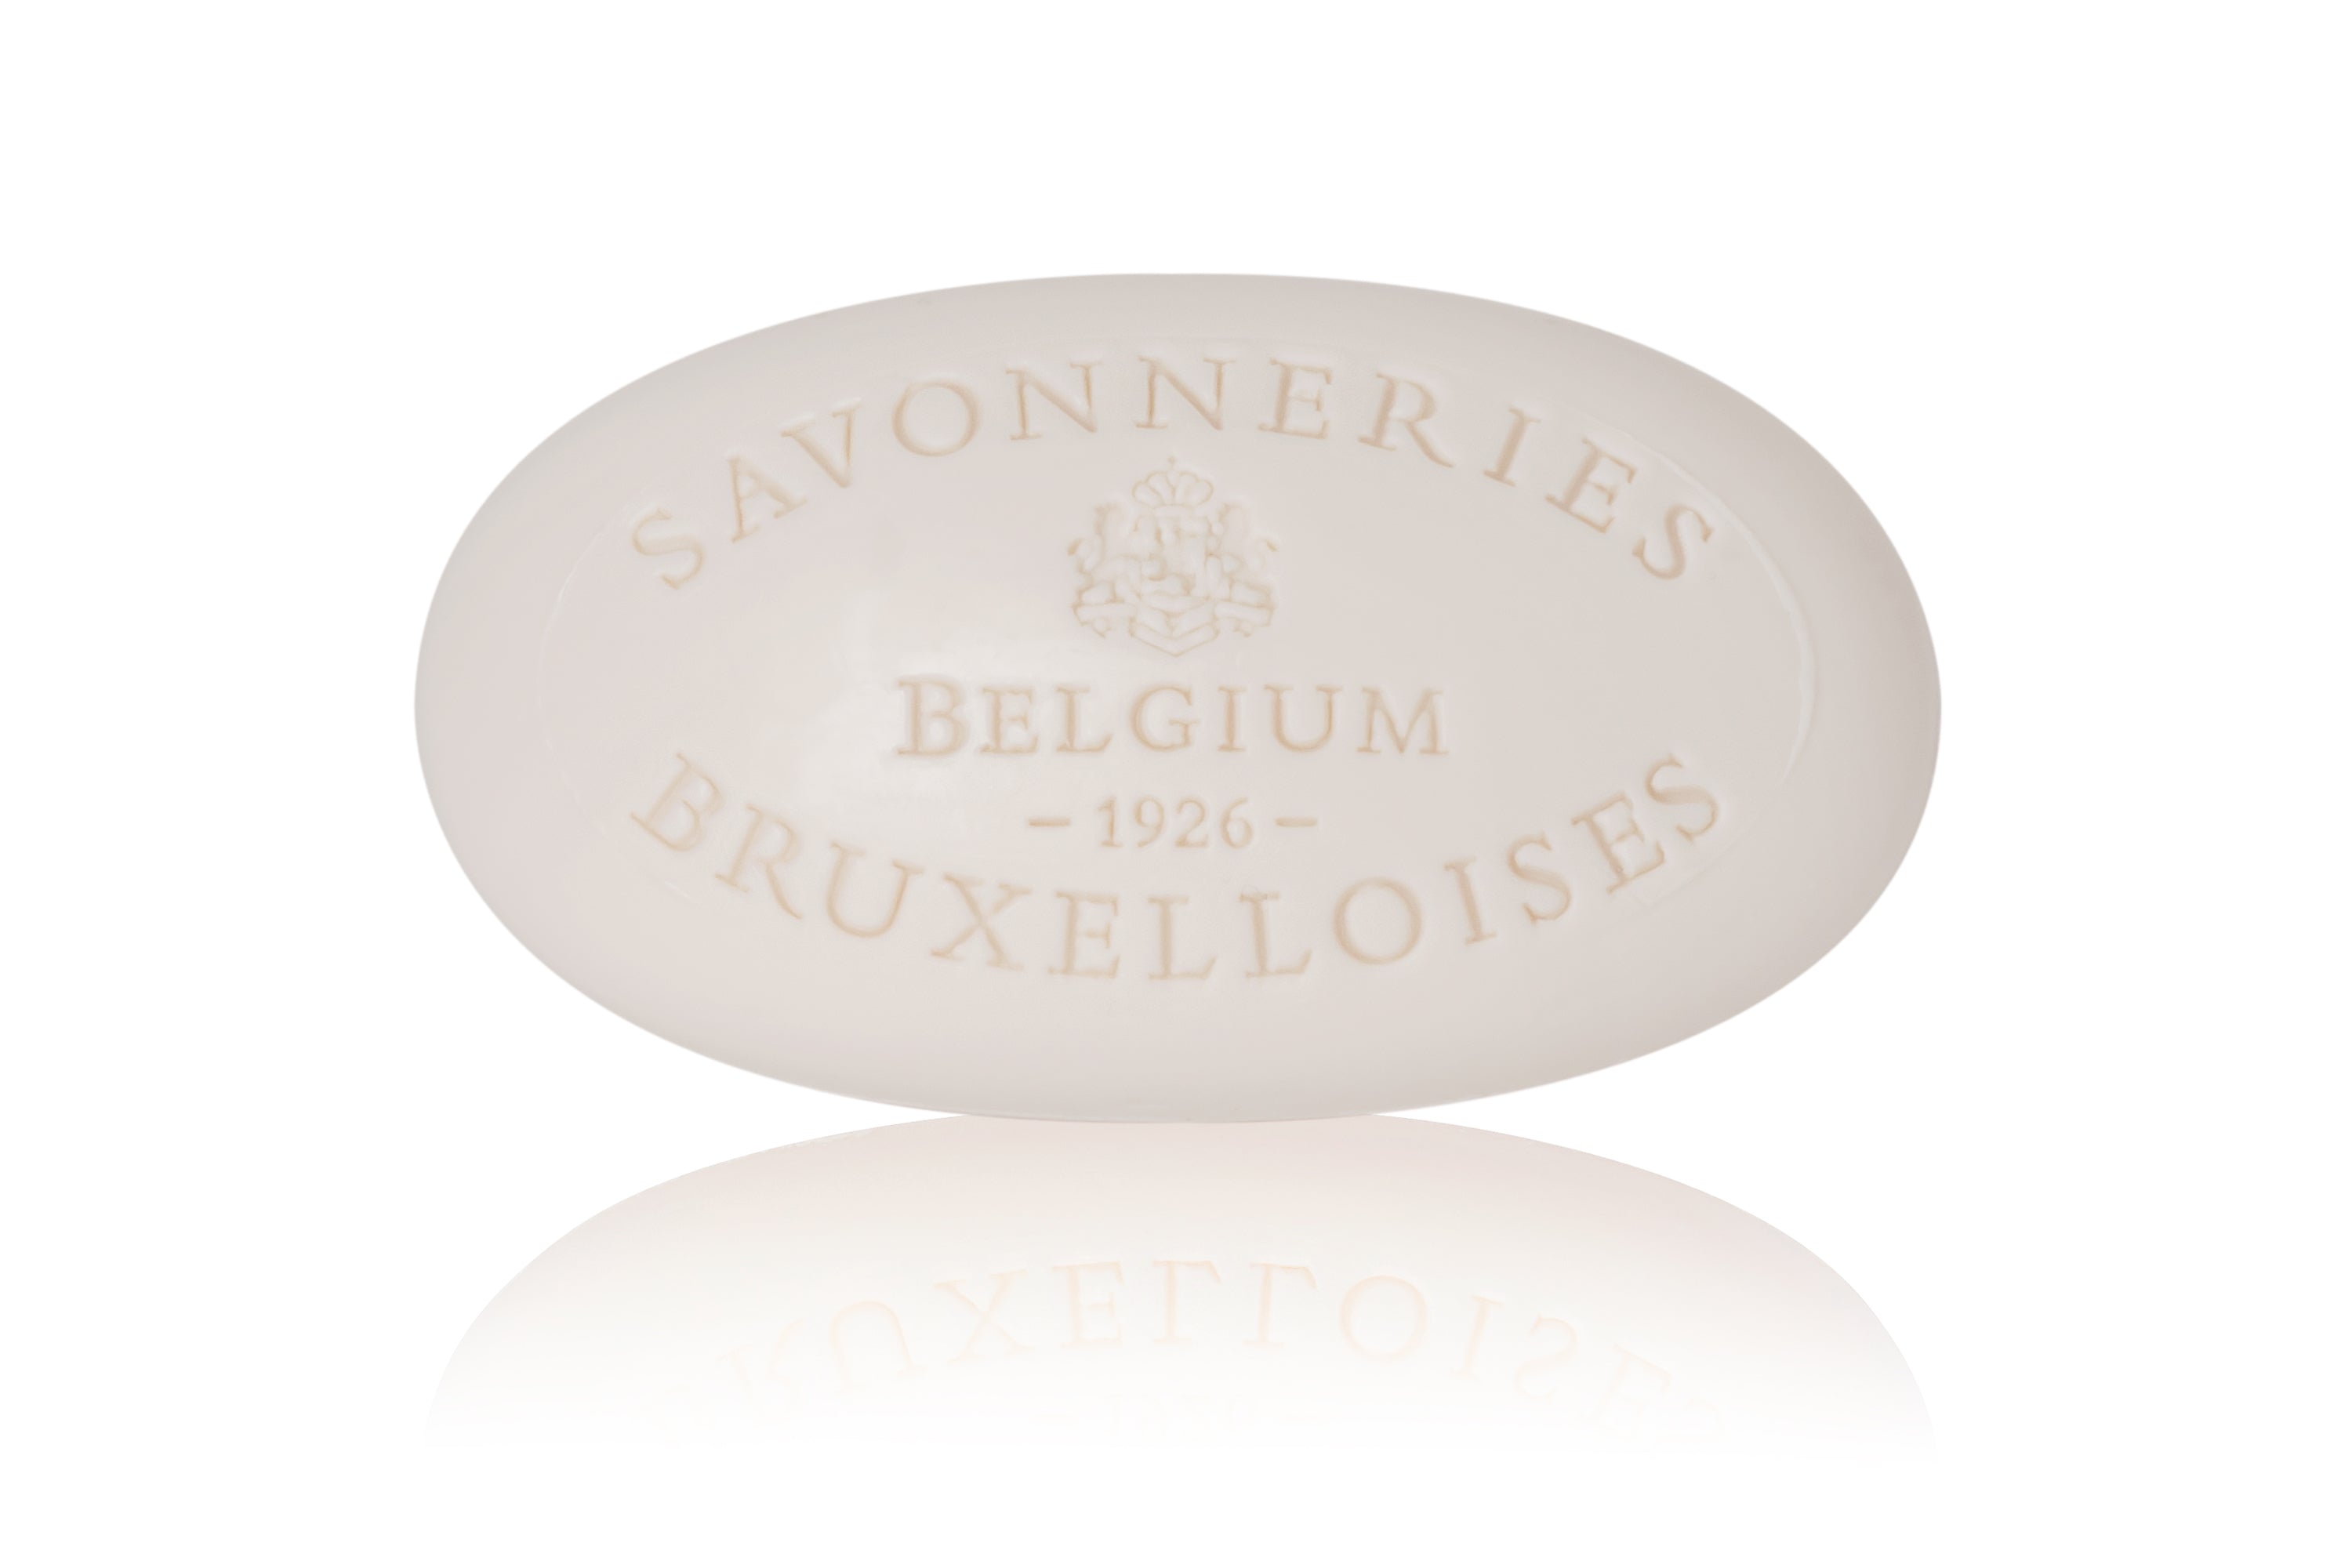 Savonneries Bruxelloises - Duo Box - Champagne